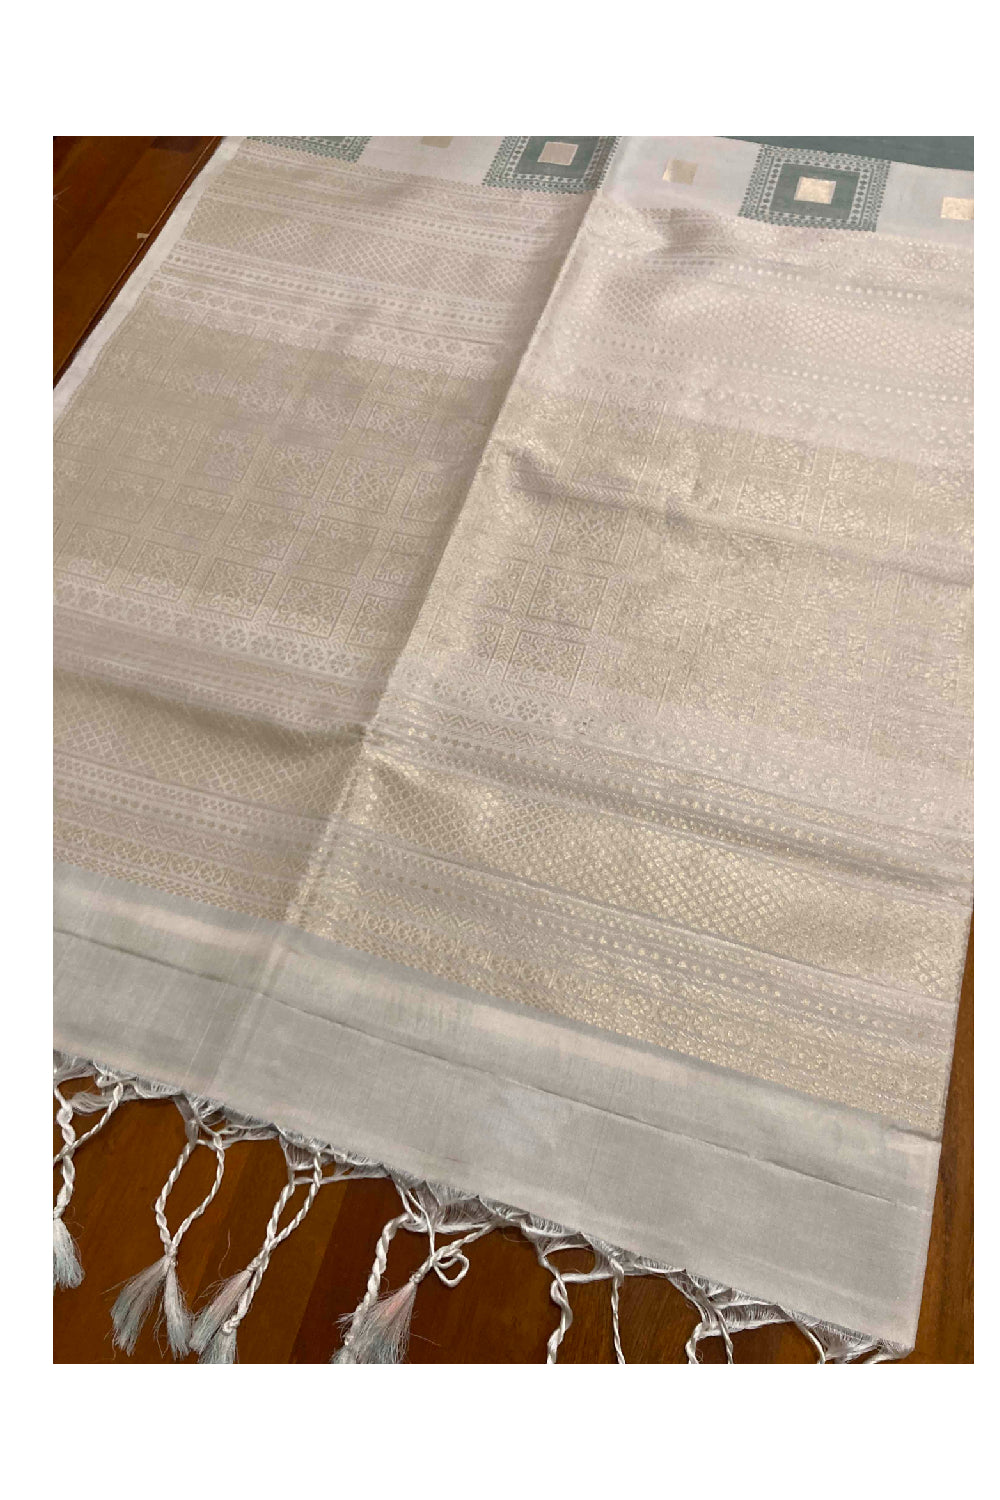 Southloom Handloom Pure Silk Kanchipuram Saree in Cream Floral Motifs